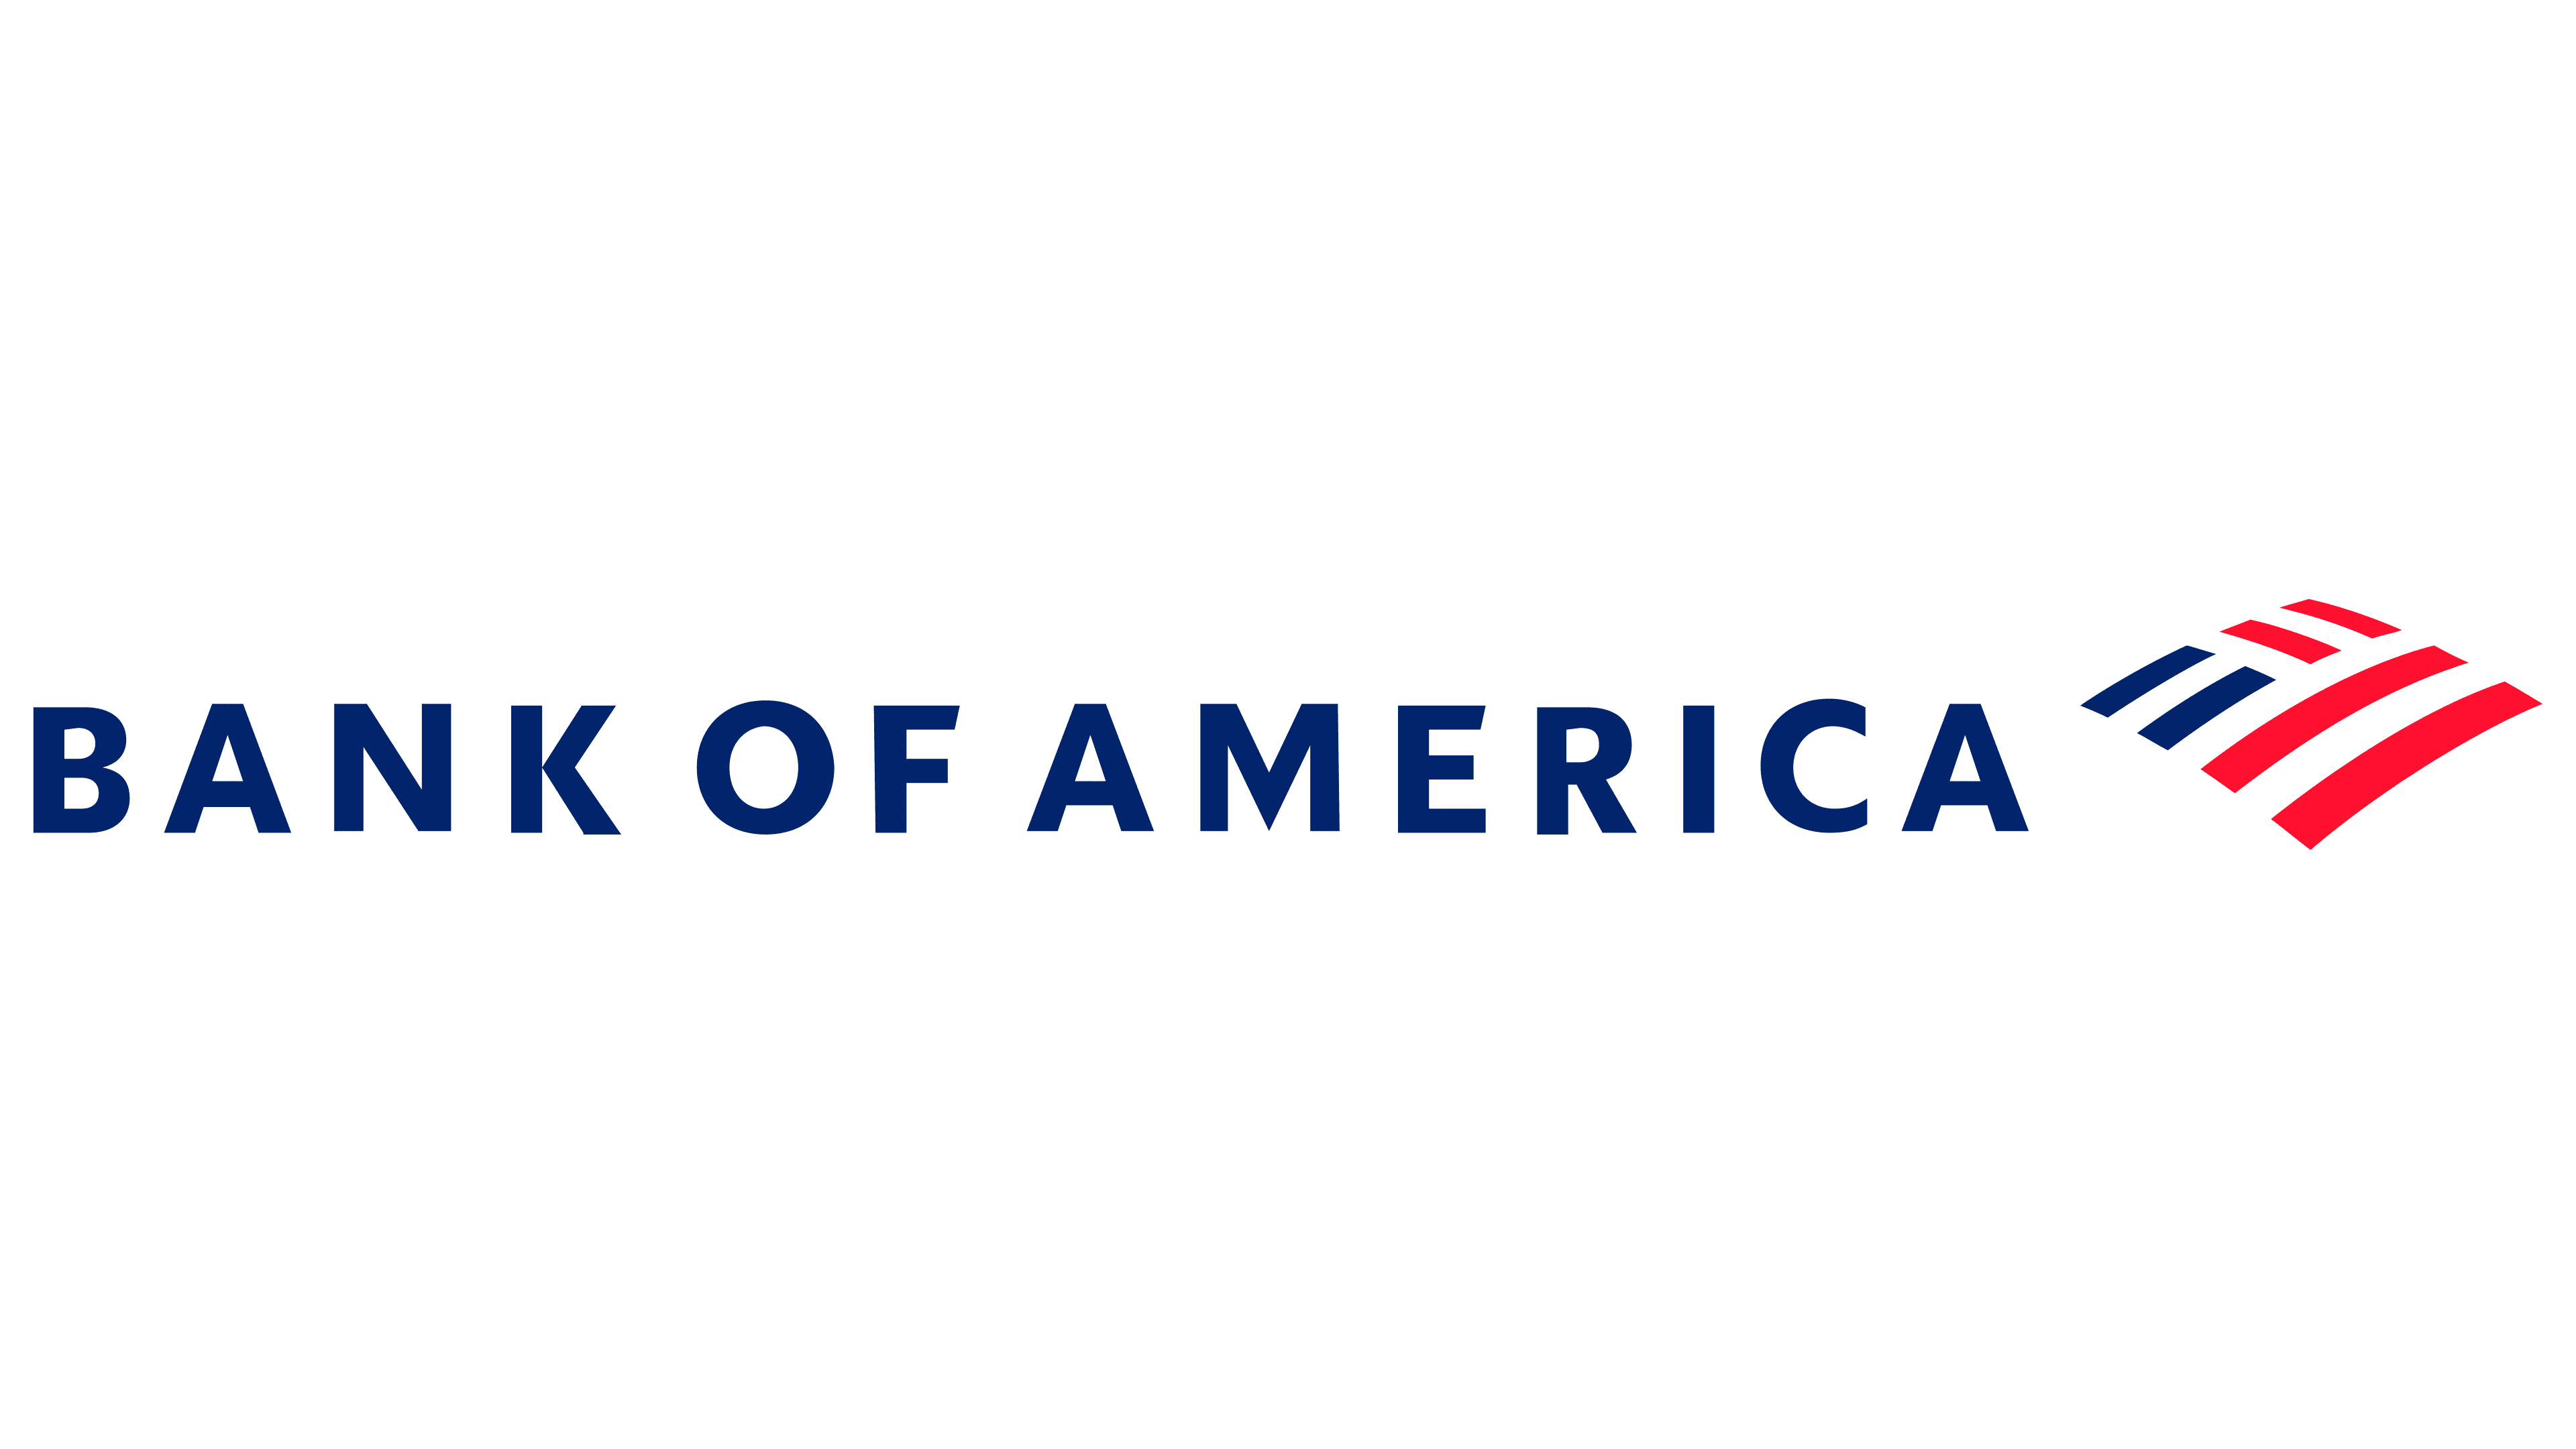 Bank of America Logo histoire, signification de l'emblème